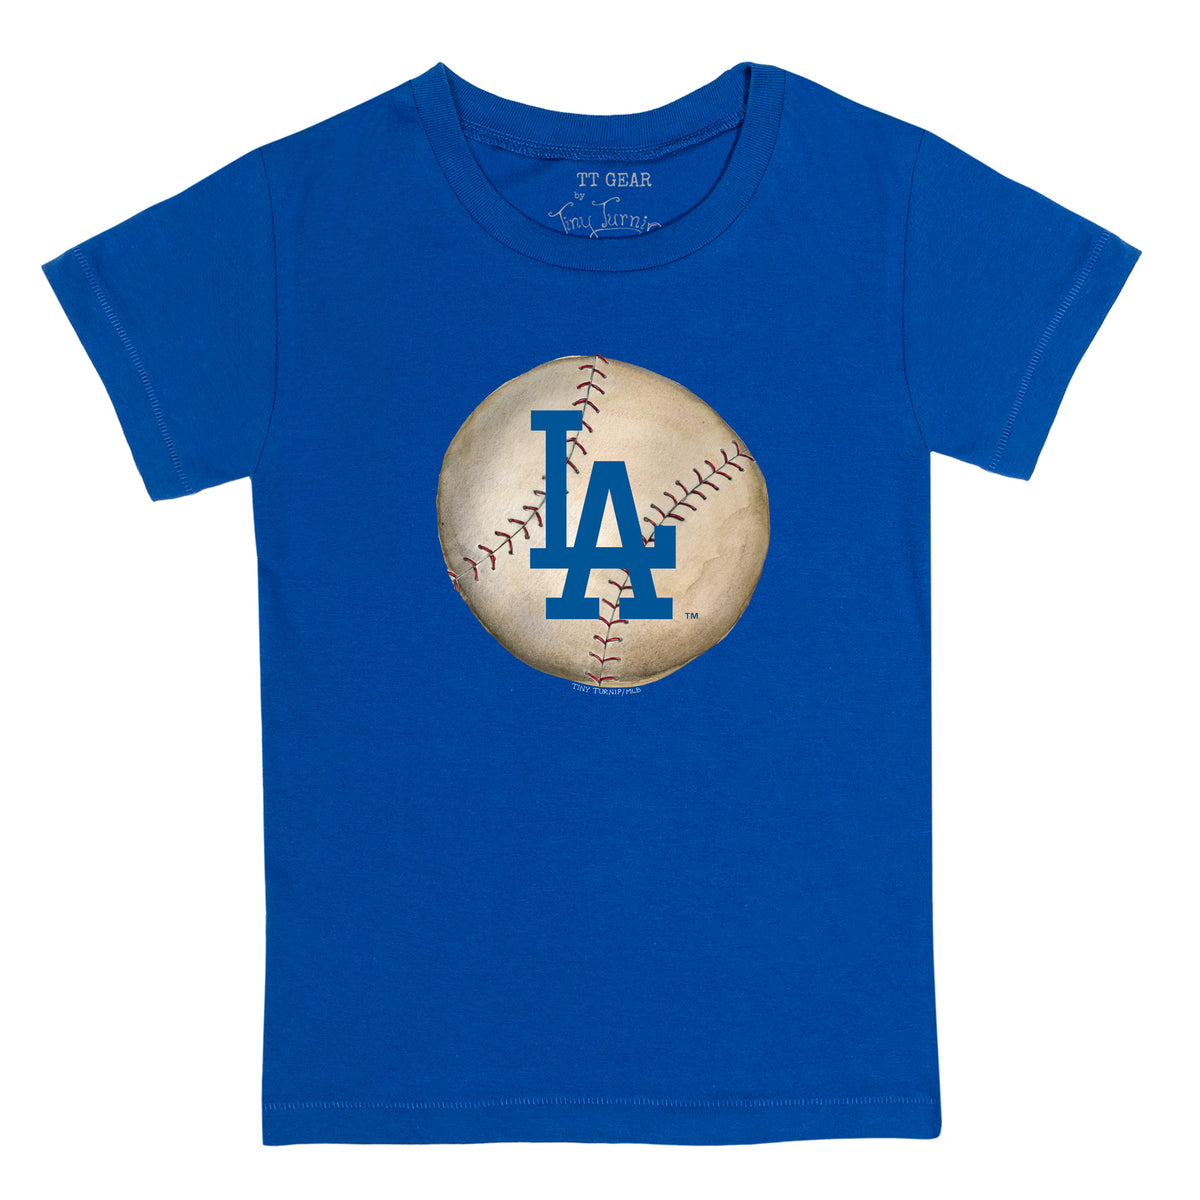 Los Angeles Dodgers Stitched Baseball Tee Shirt 12M / Royal Blue